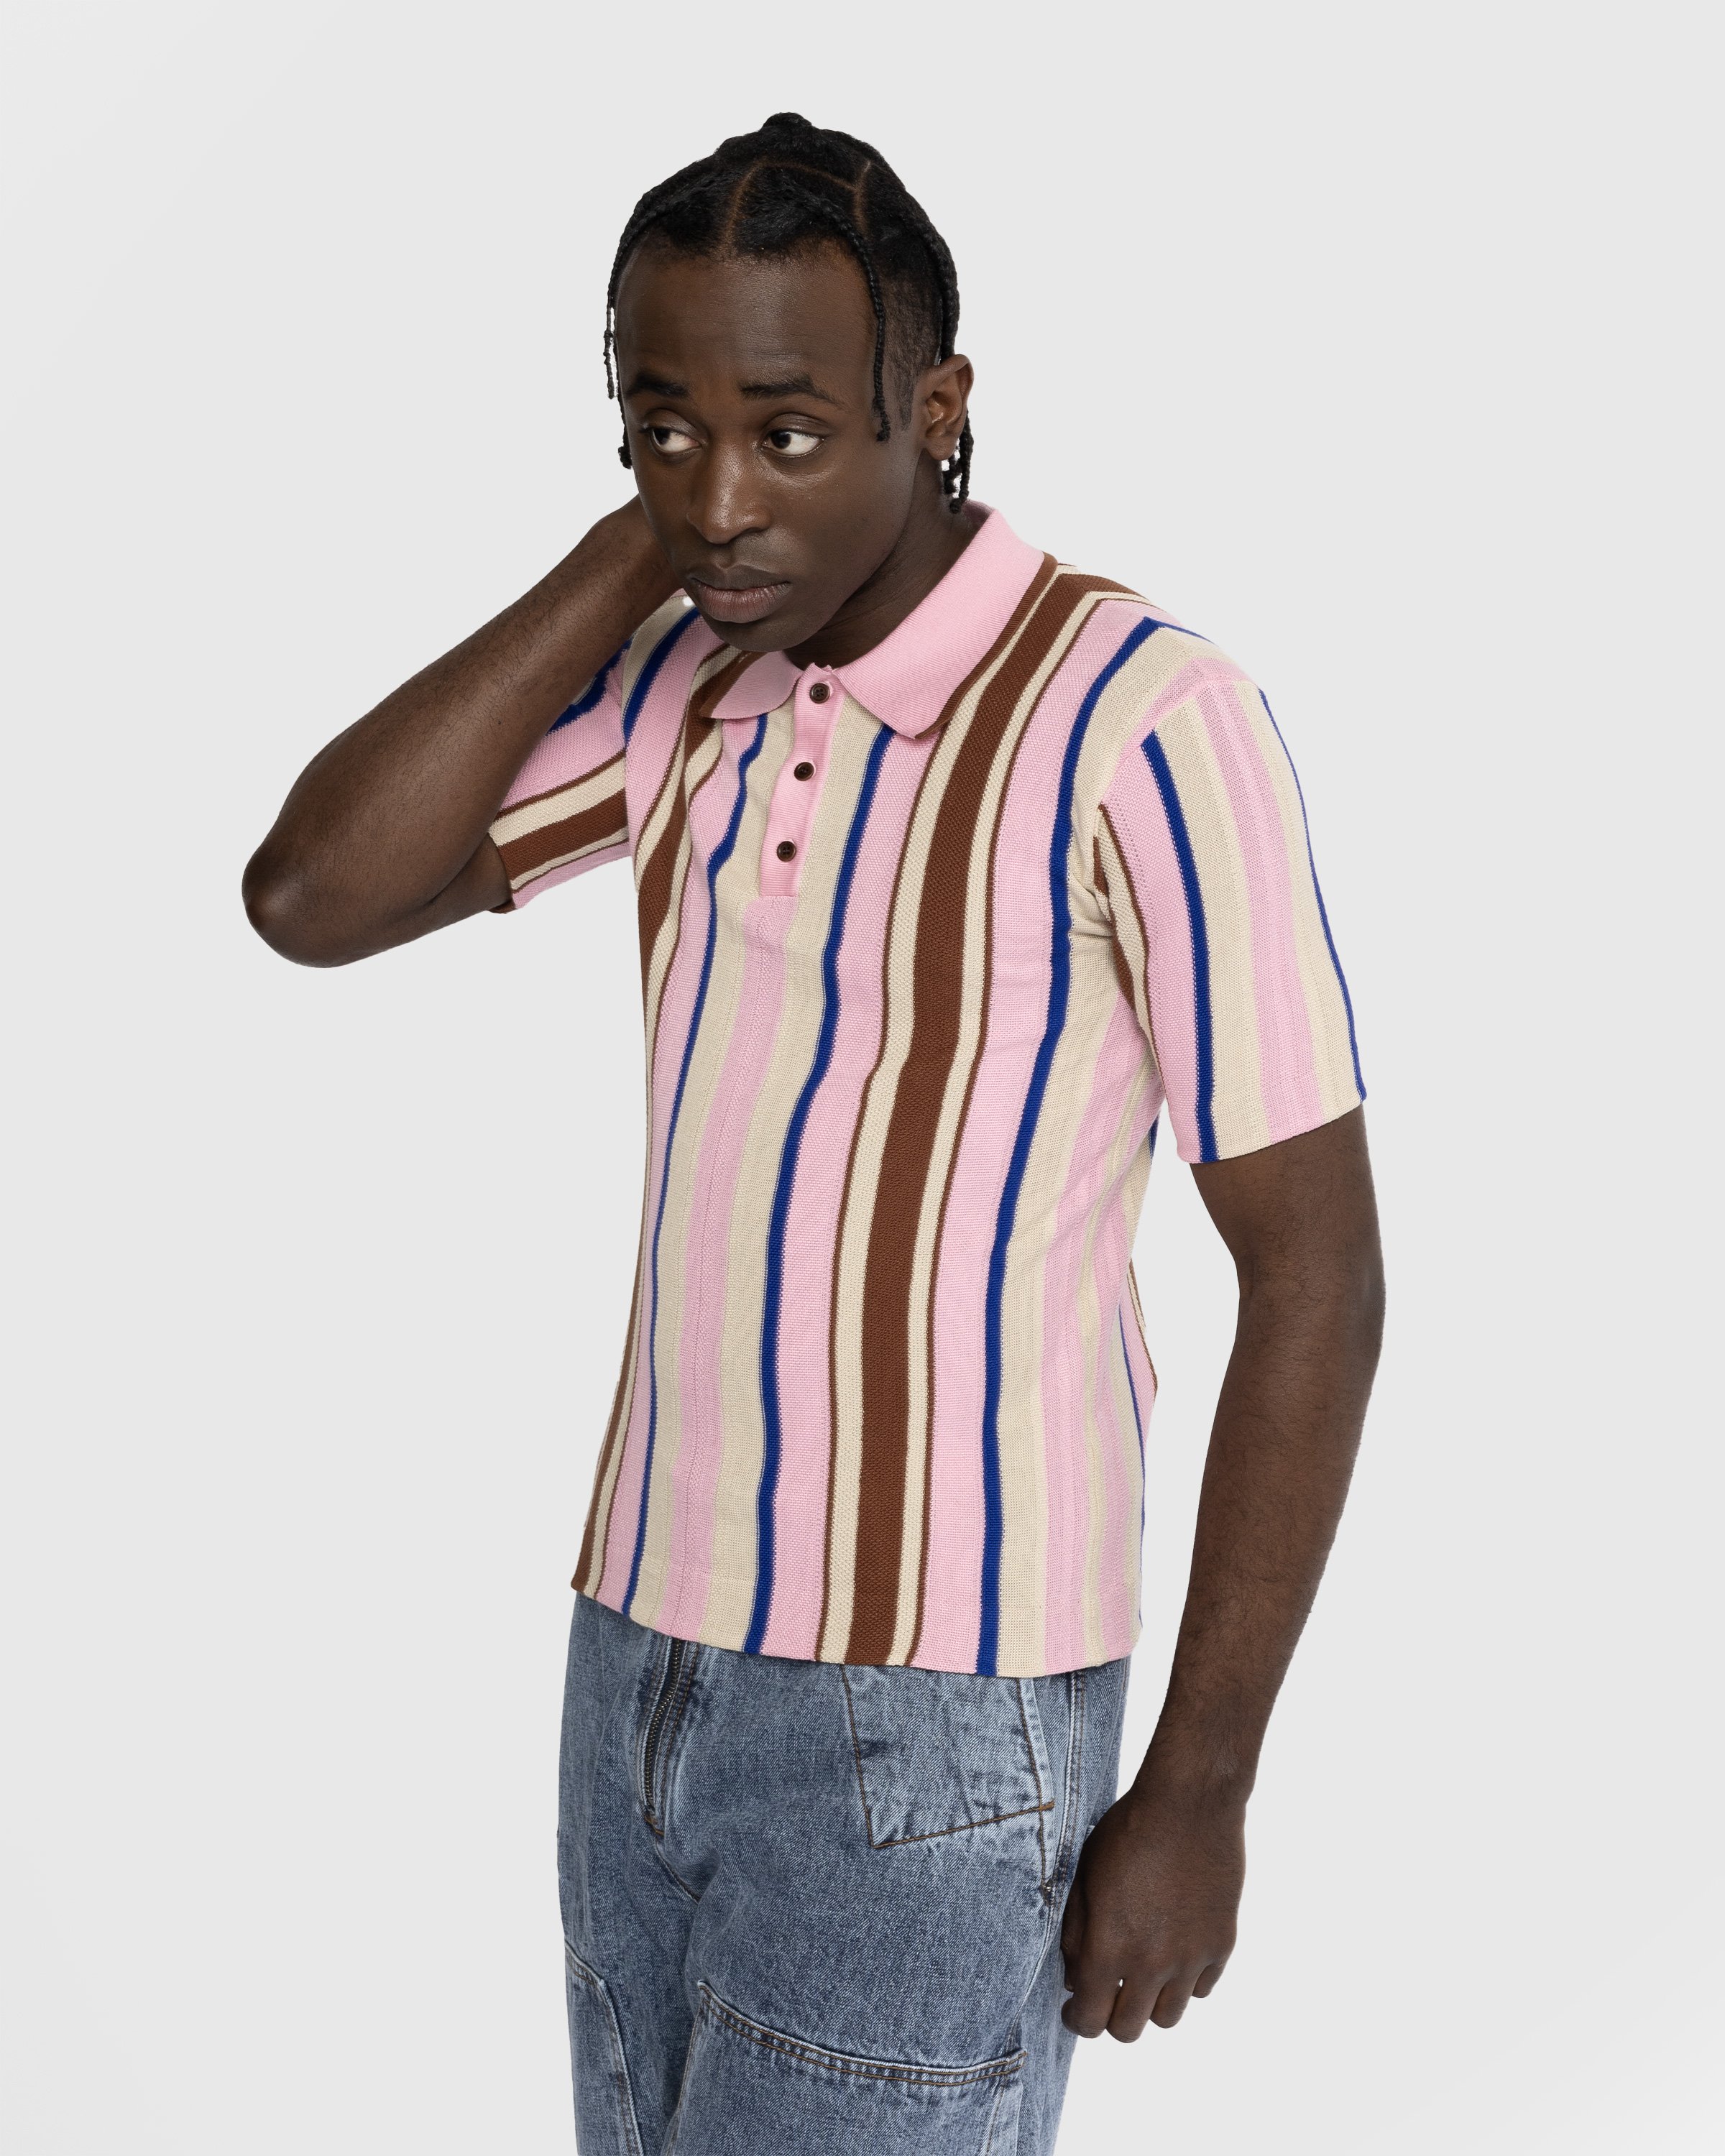 Wales Bonner - Optimist Polo Shirt - Clothing - Pink - Image 5